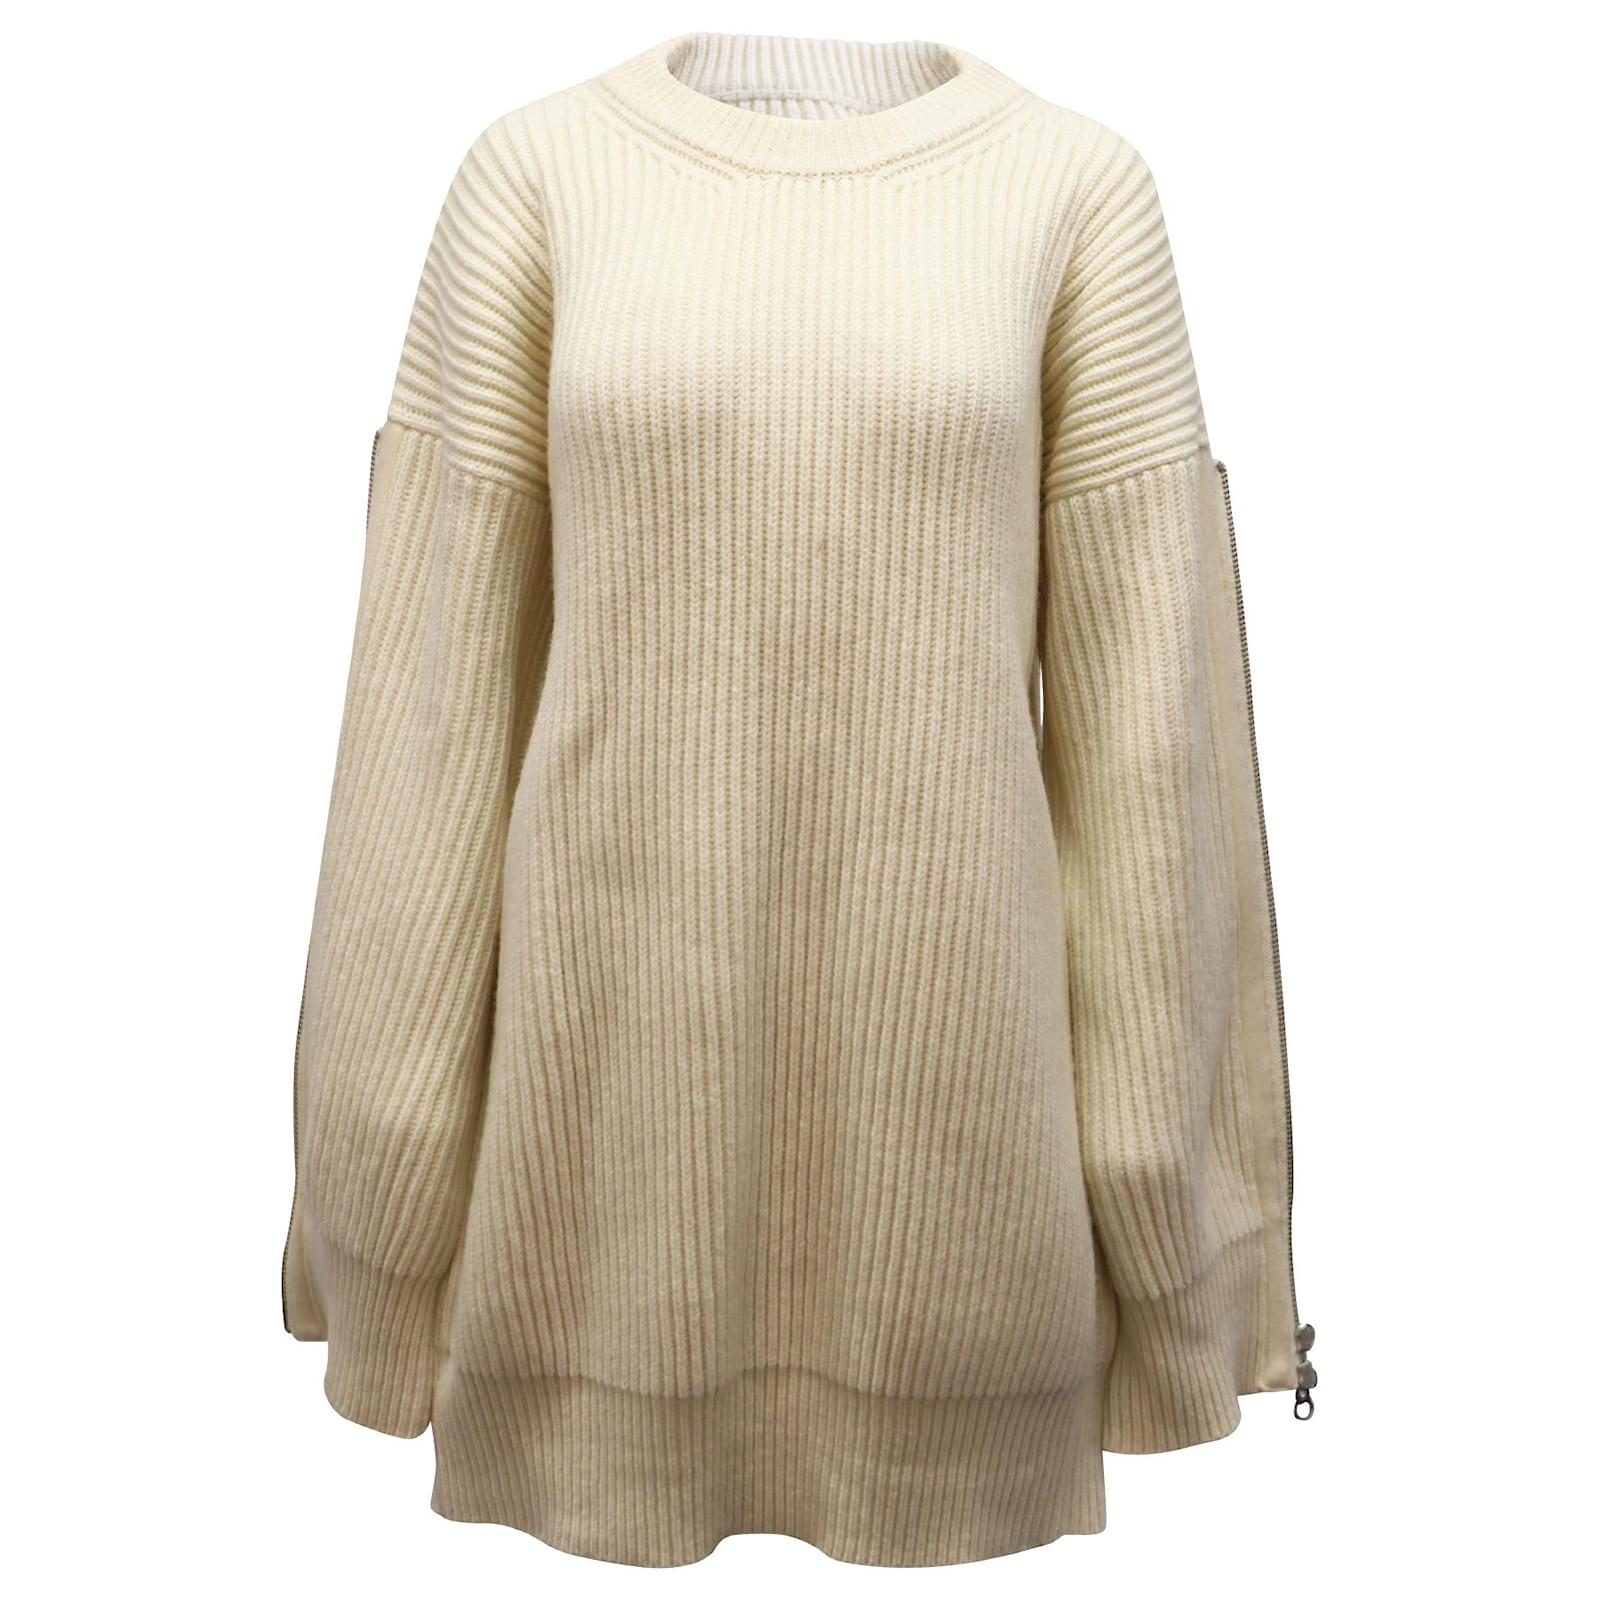 Maison Martin Margiela Convertible Chunky Knit Sweater in Cream